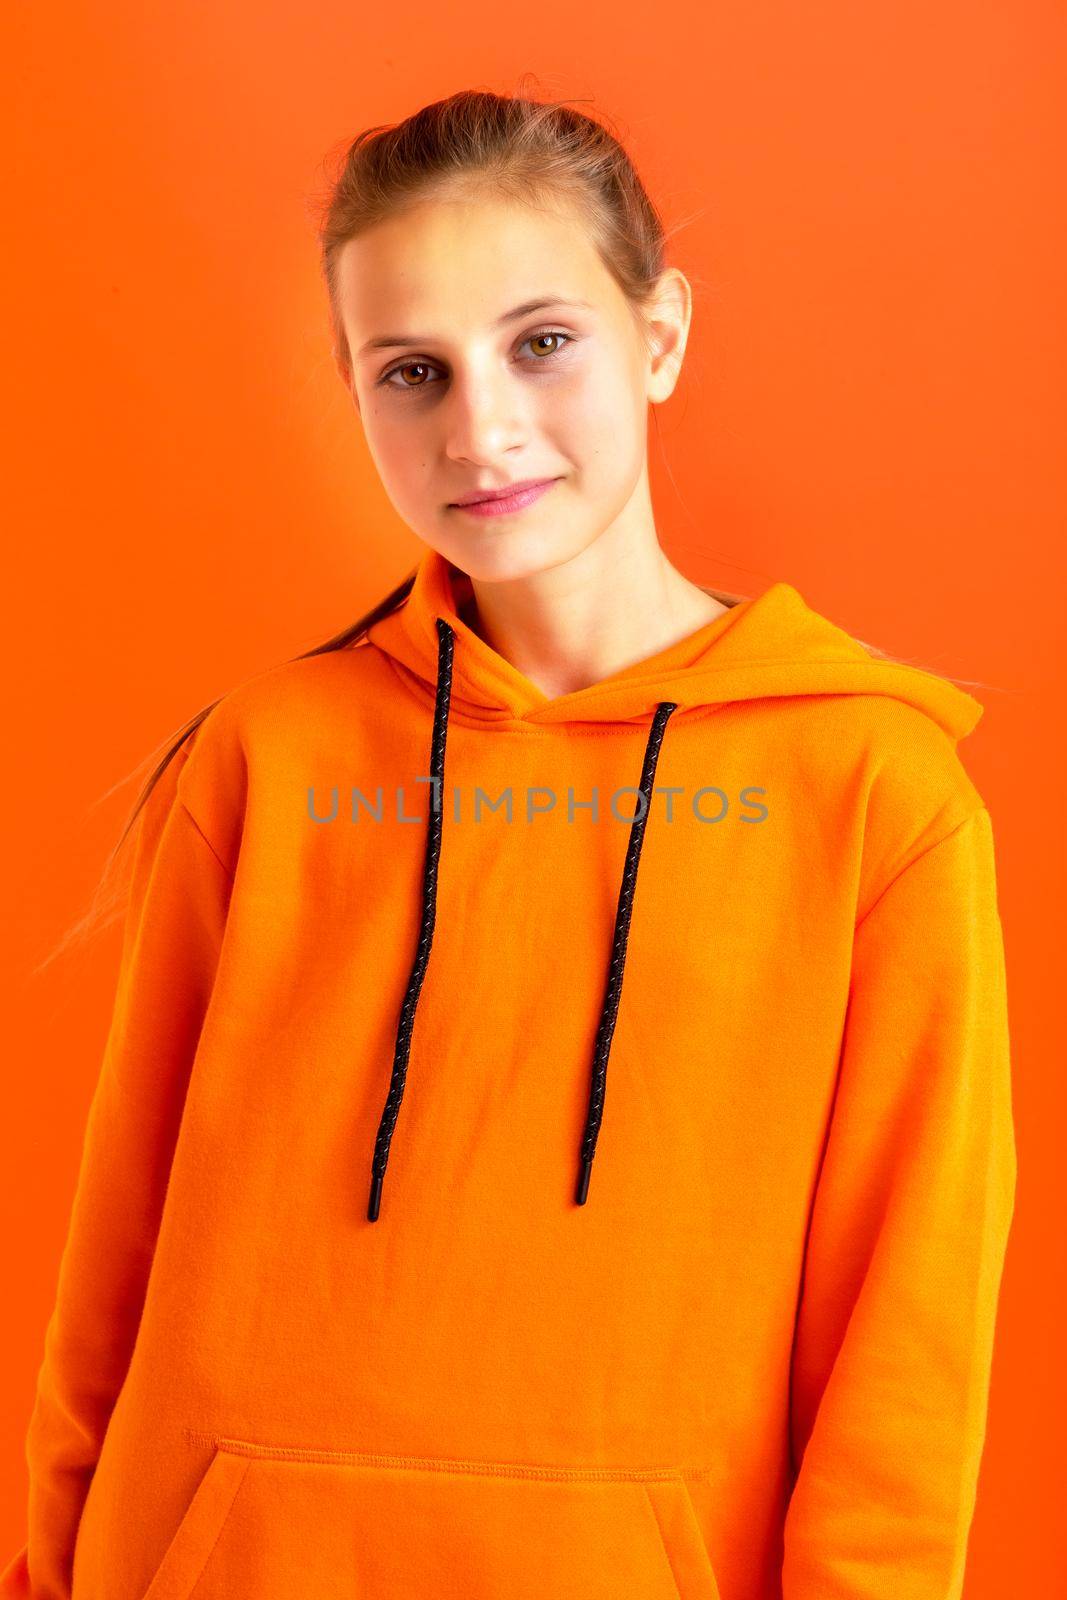 Stylish teenage girl in orange hoodie. Cheerful teenager wearing oversized sweatshirt standing against orange background. Beautiful girl staring happily at camera